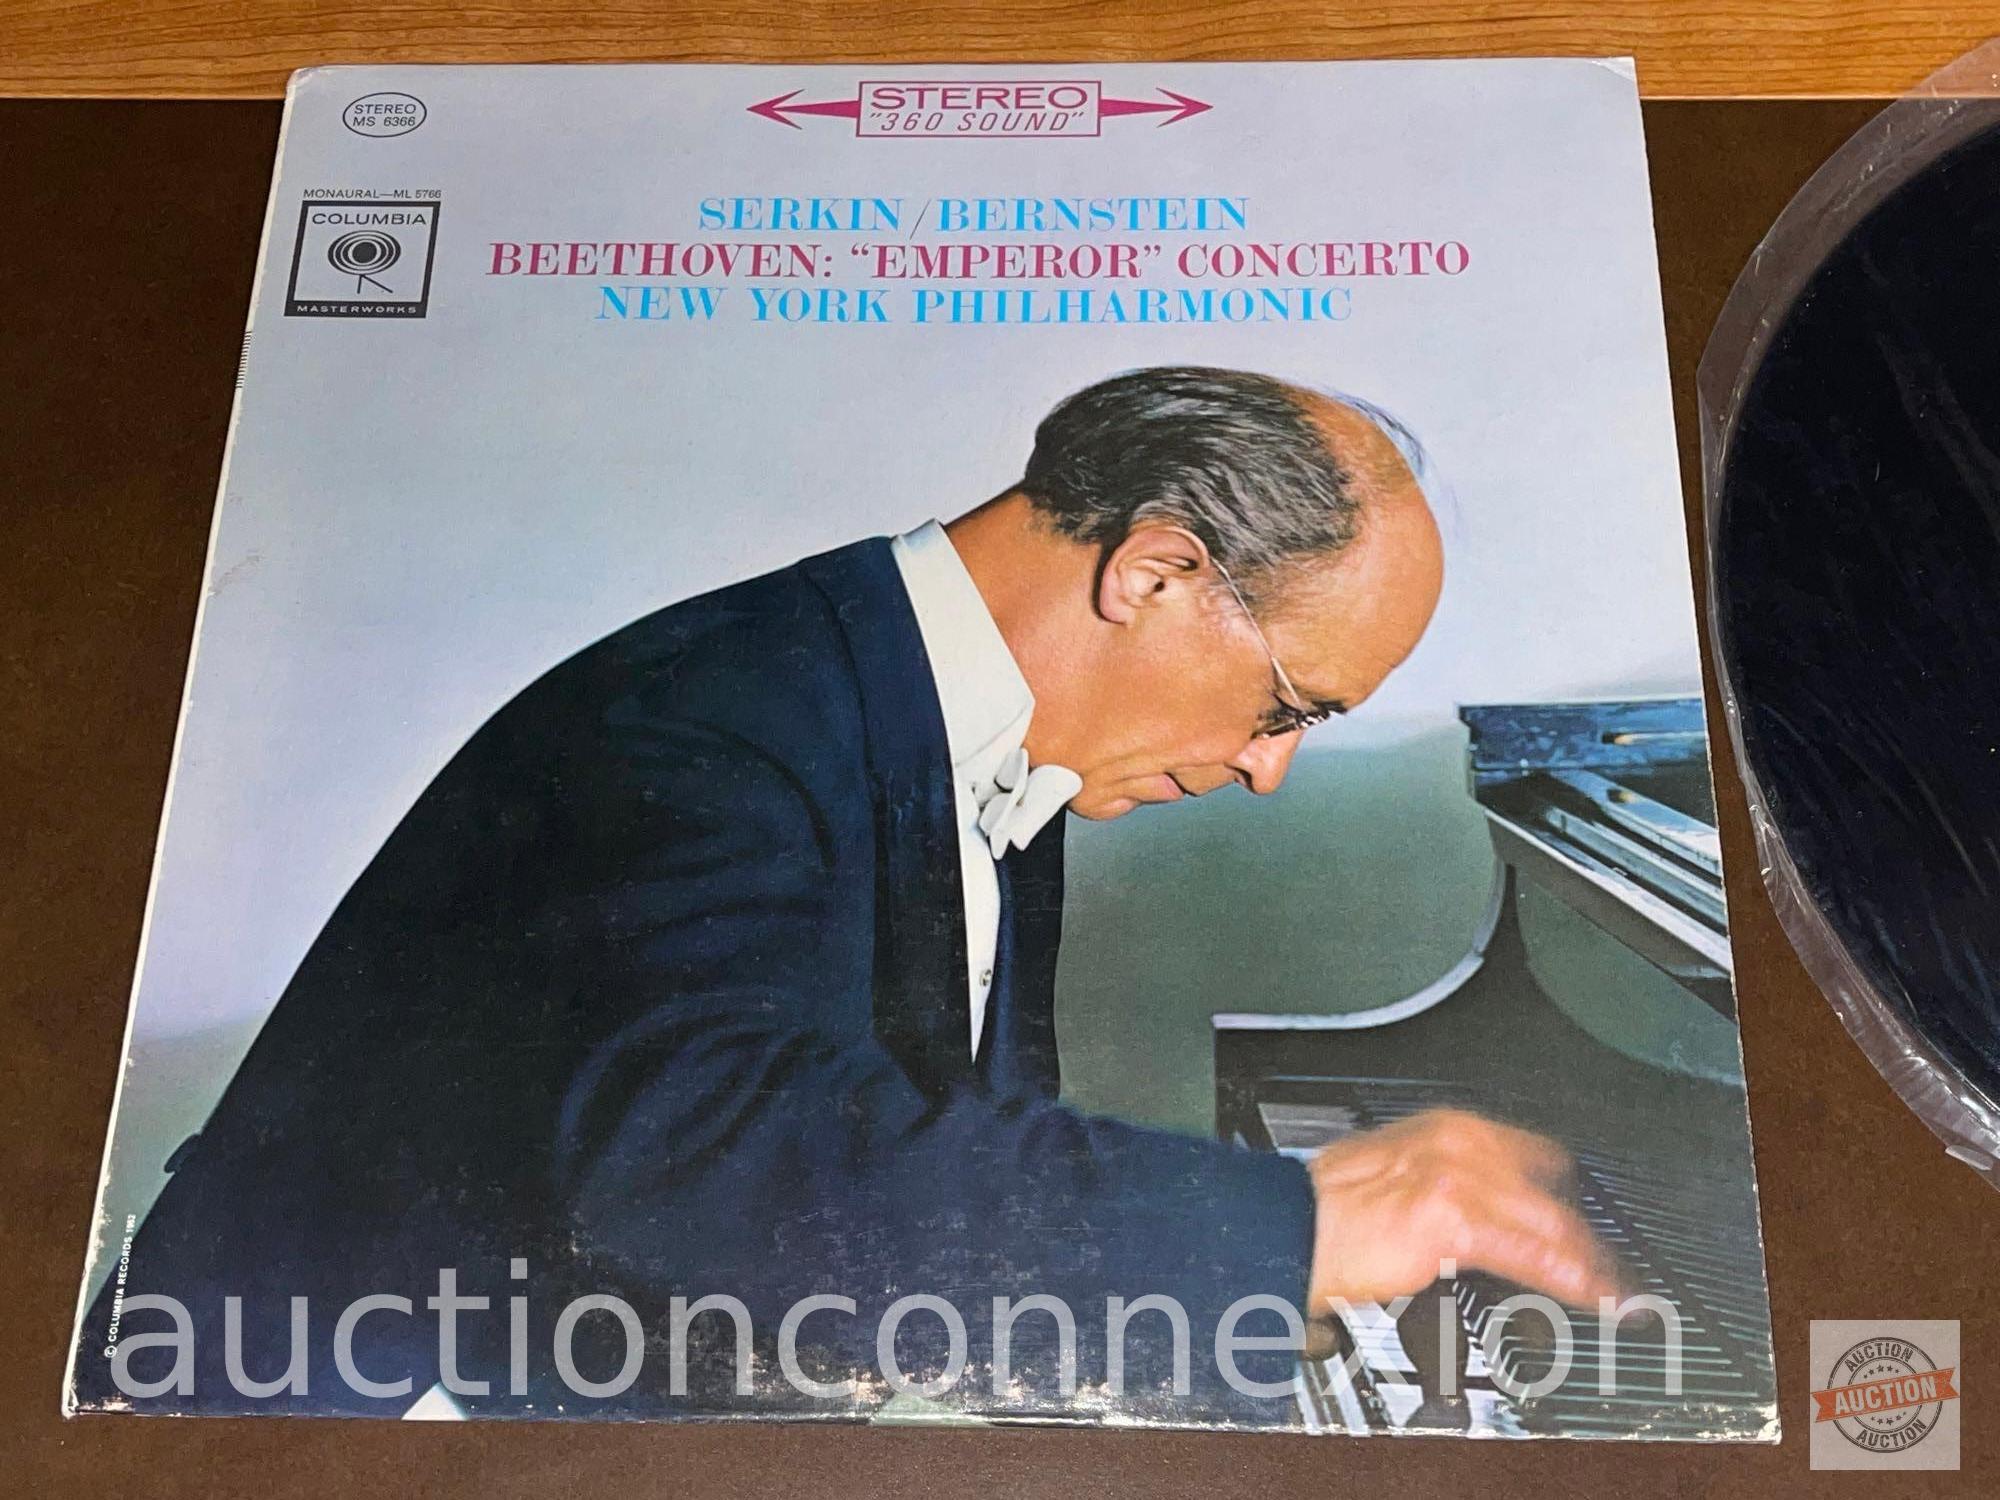 Record Album - 2 Columbia Records, 1962 New York Philharmonic and the Philadelphia Orchestra